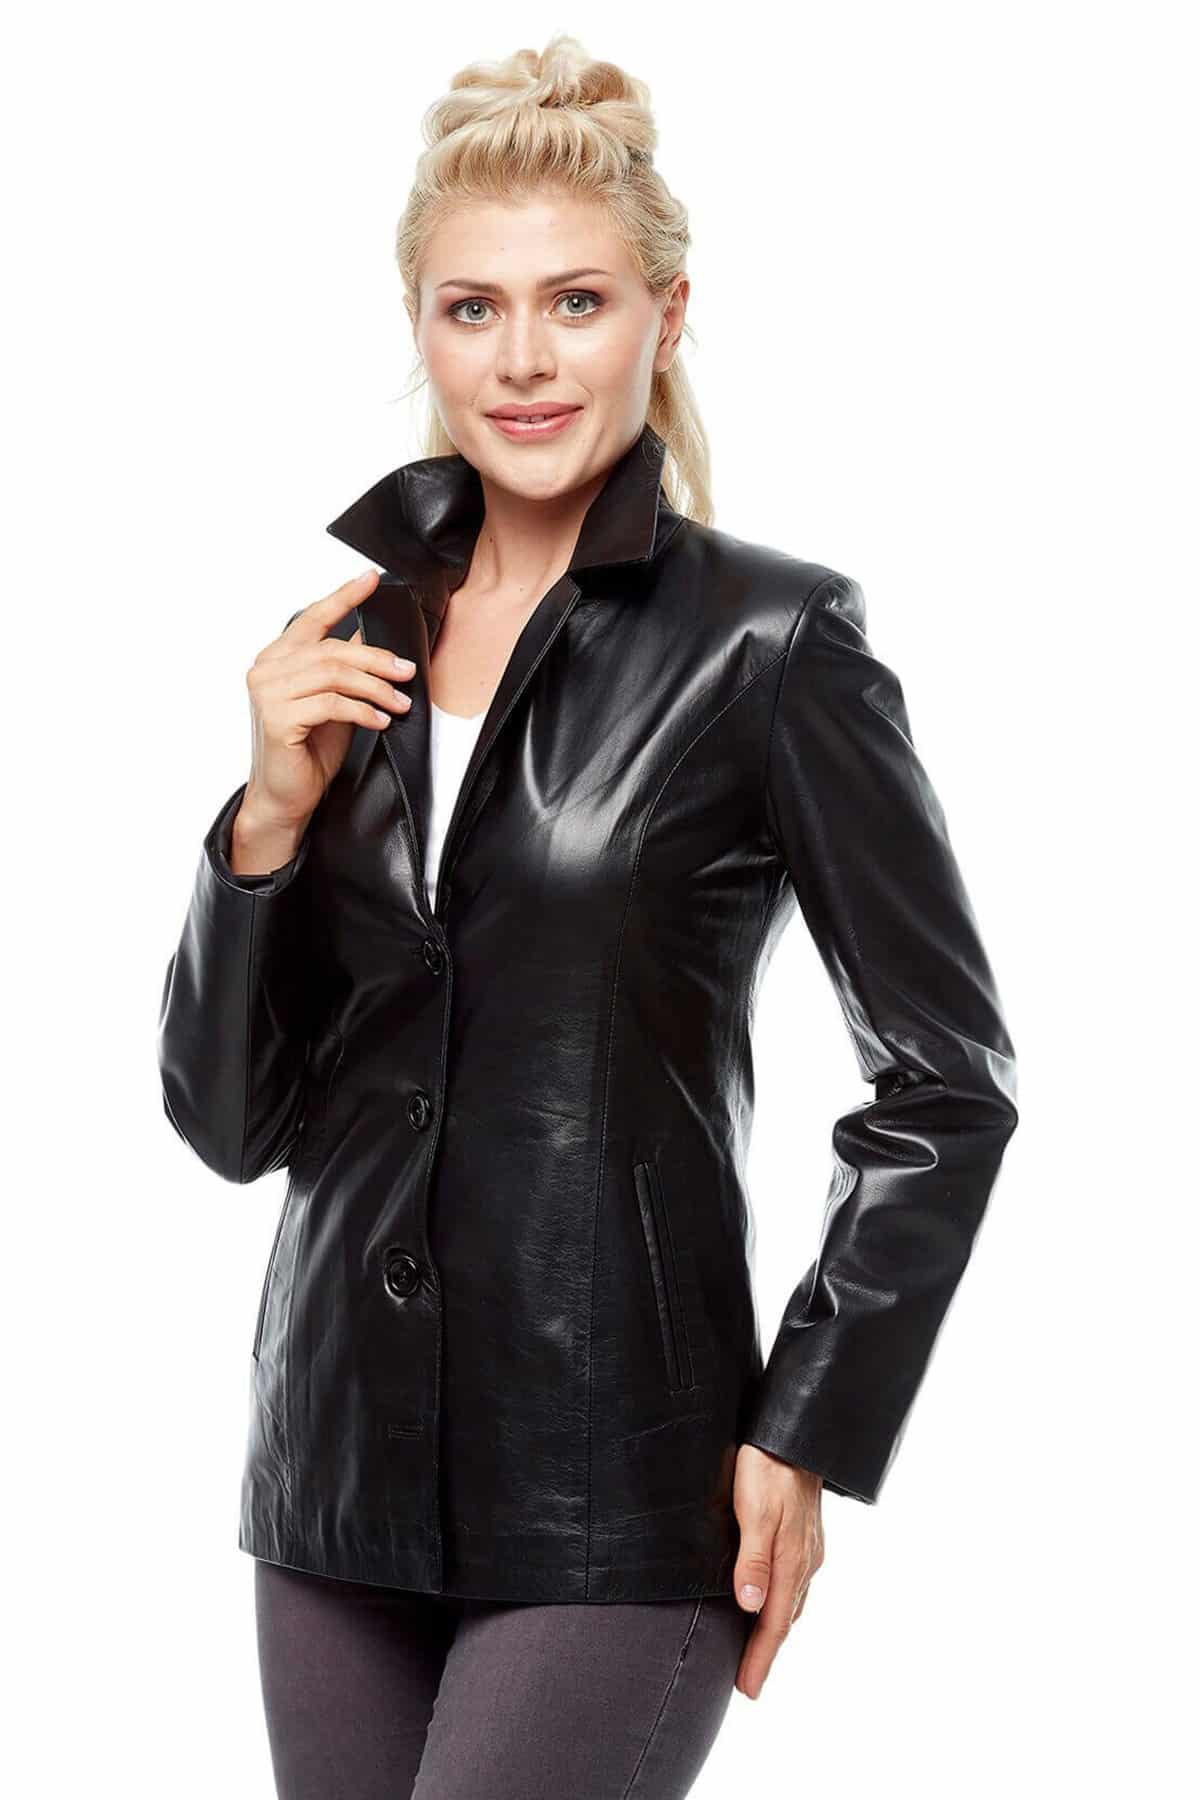 Blazer Black Leather Jacket For Women’s3